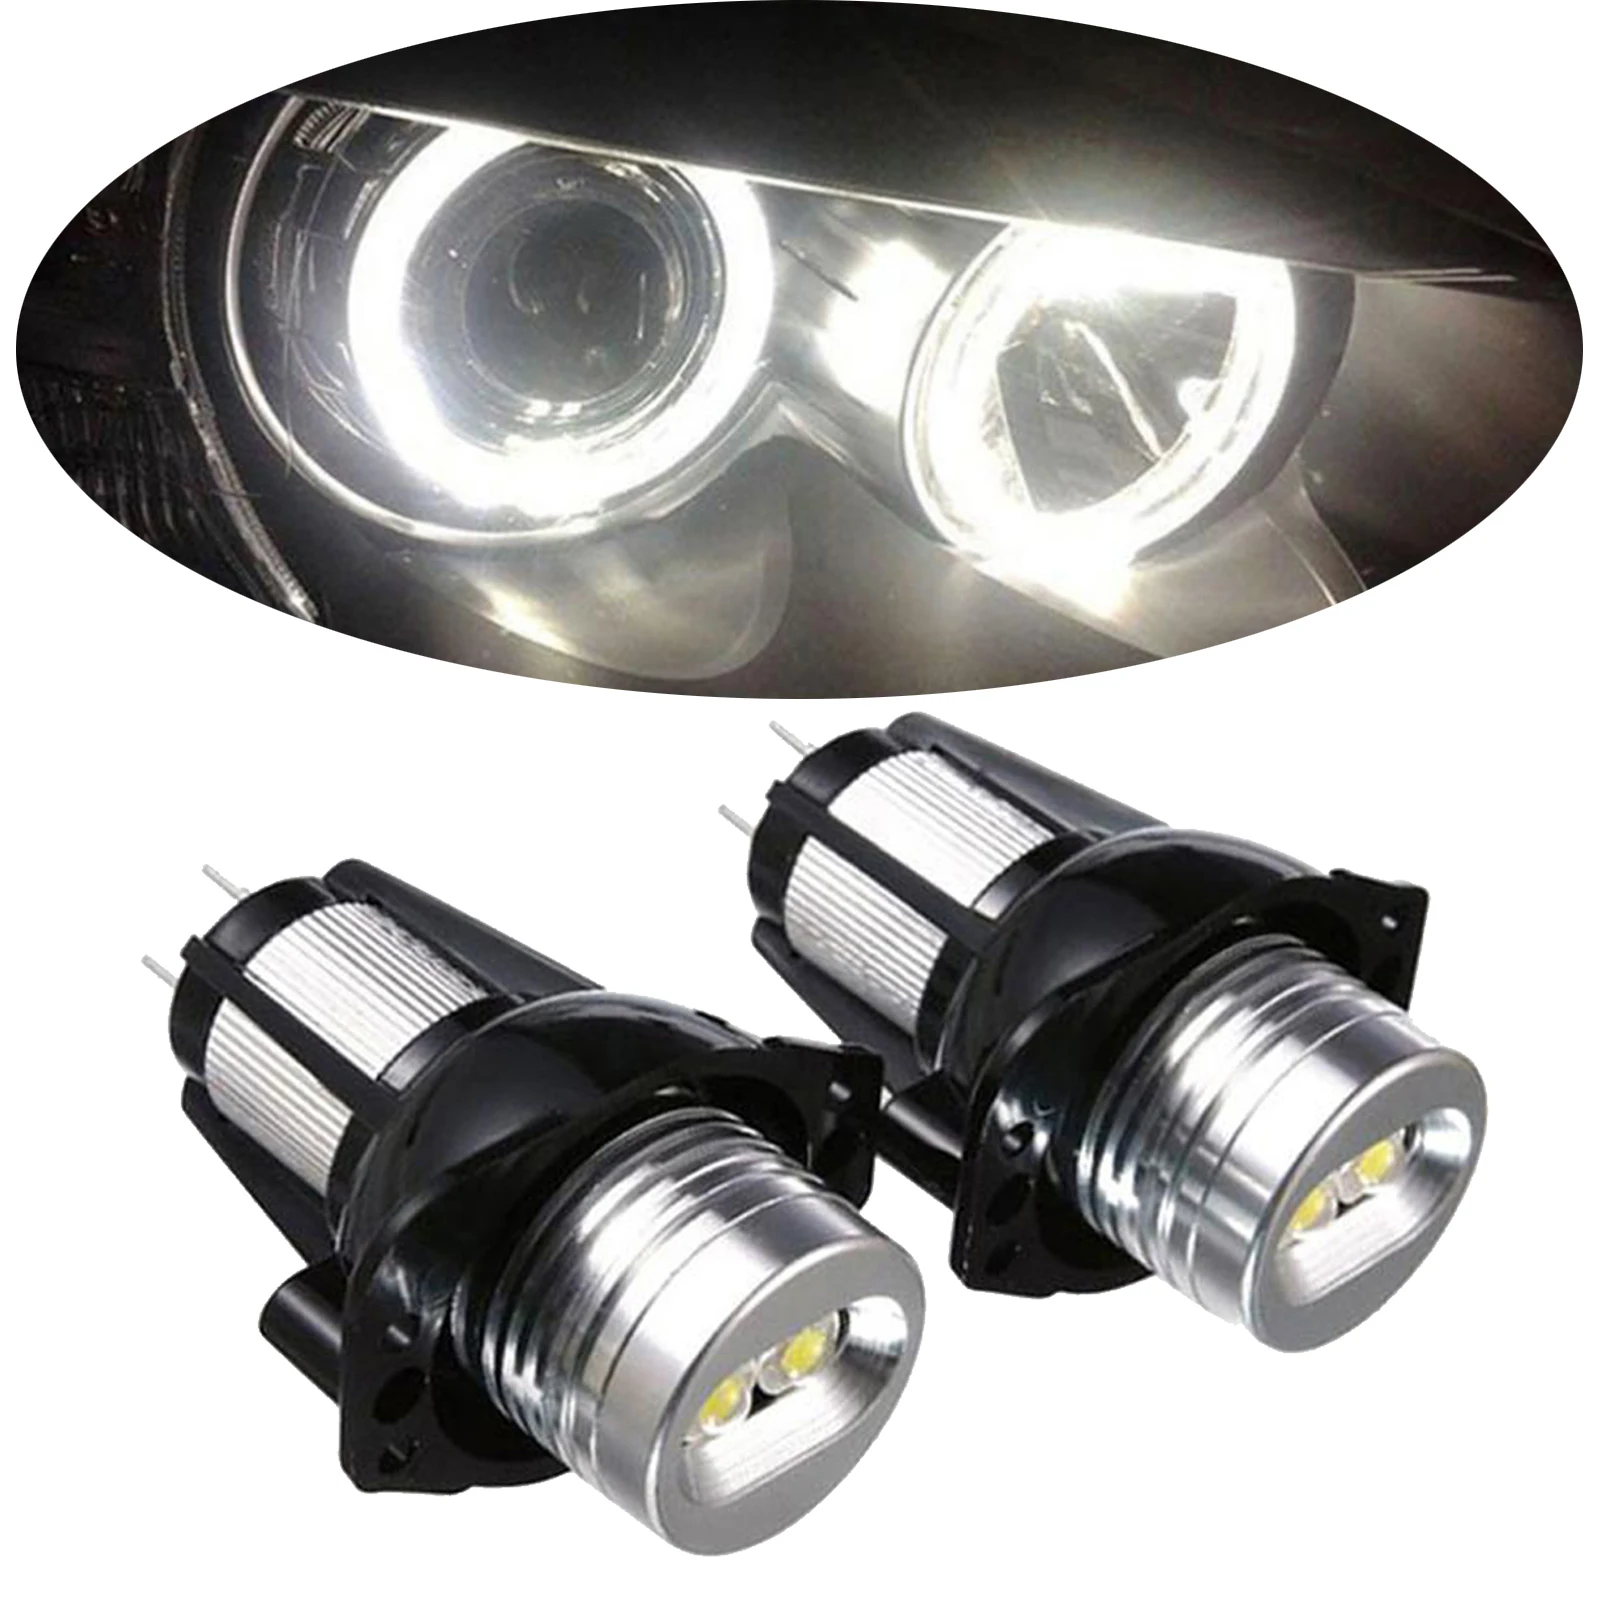 Suuonee Angel Eyes LED Light,2pcs 12W LED Angel Eyes Halo Ring Marker Light for E90 E91 05-08 Auto Lamps 